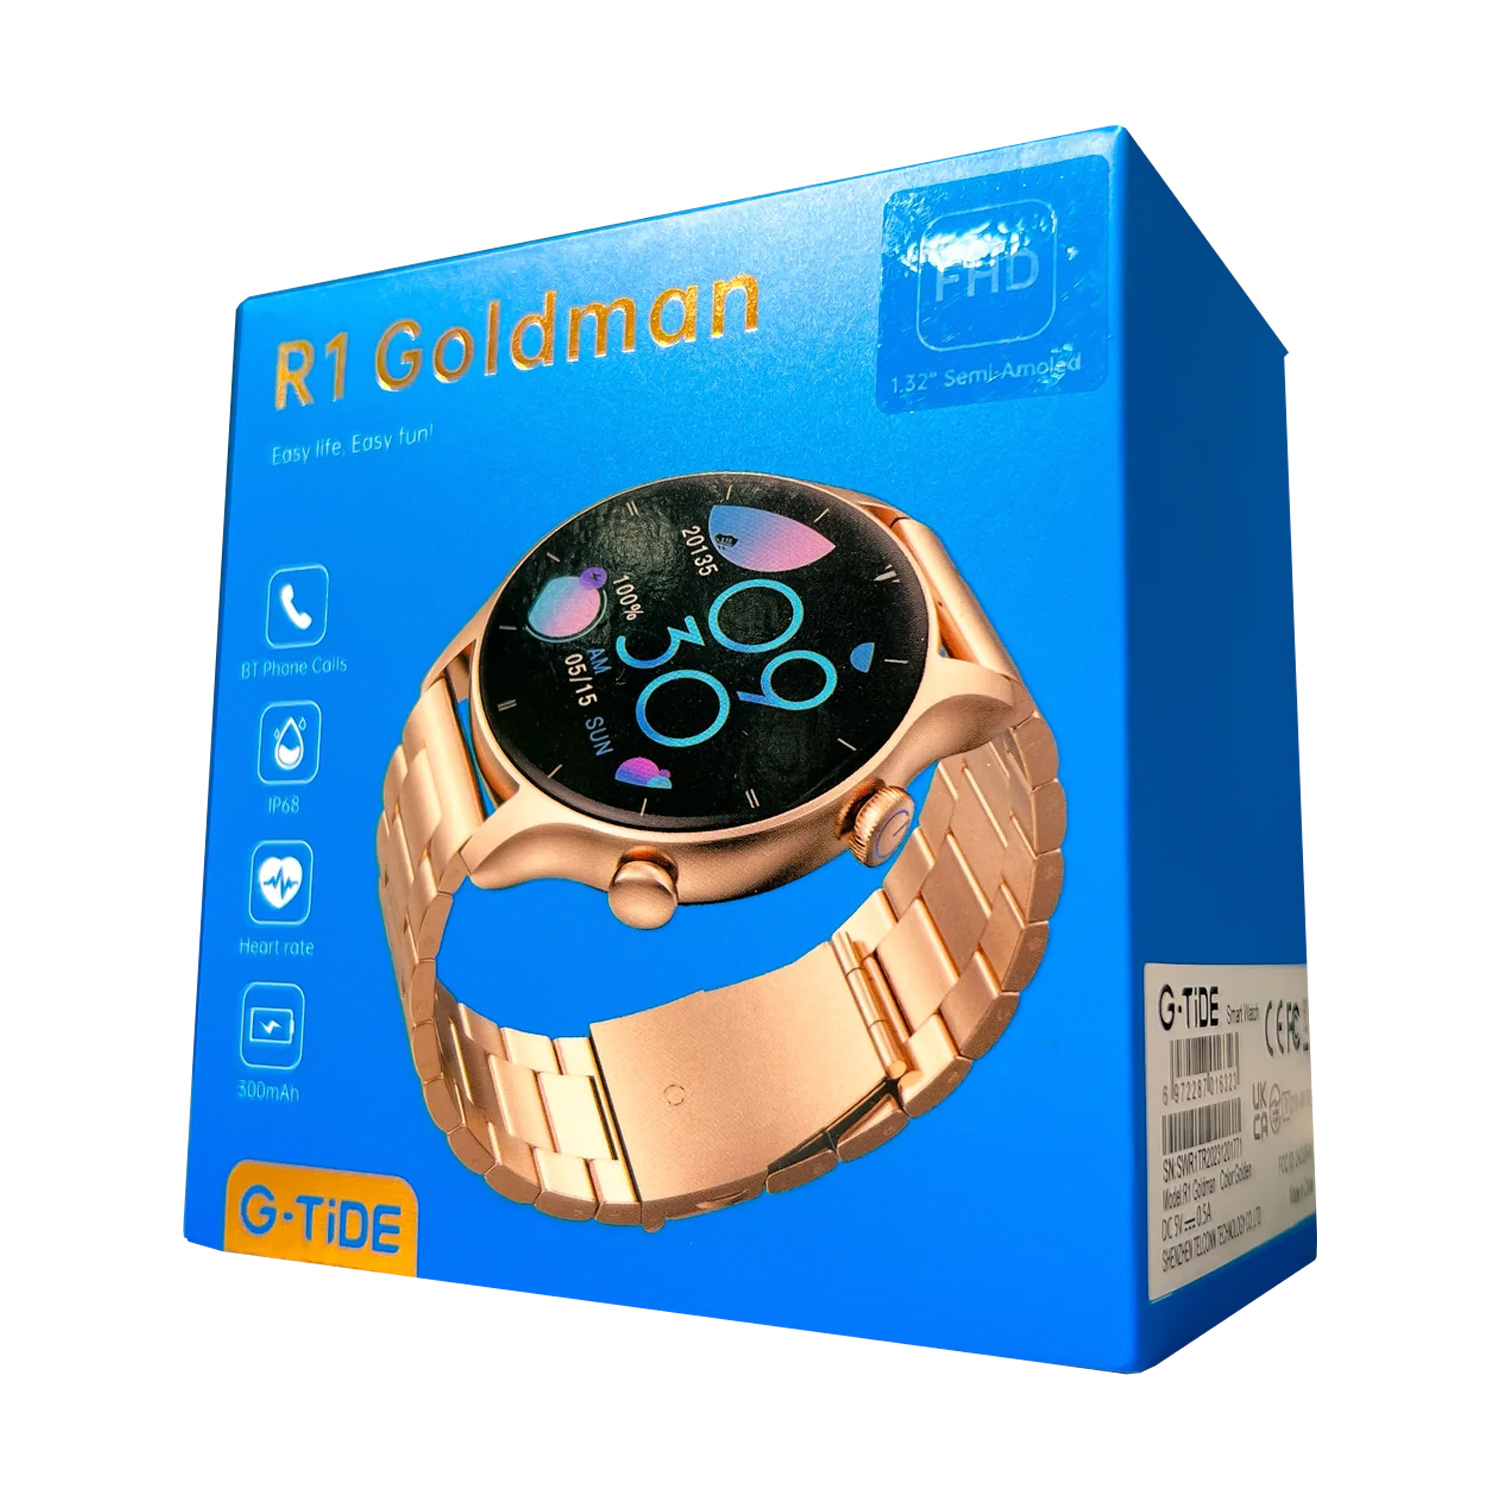 Smartwatch G-Tide Watch R1 Goldman - Dourado